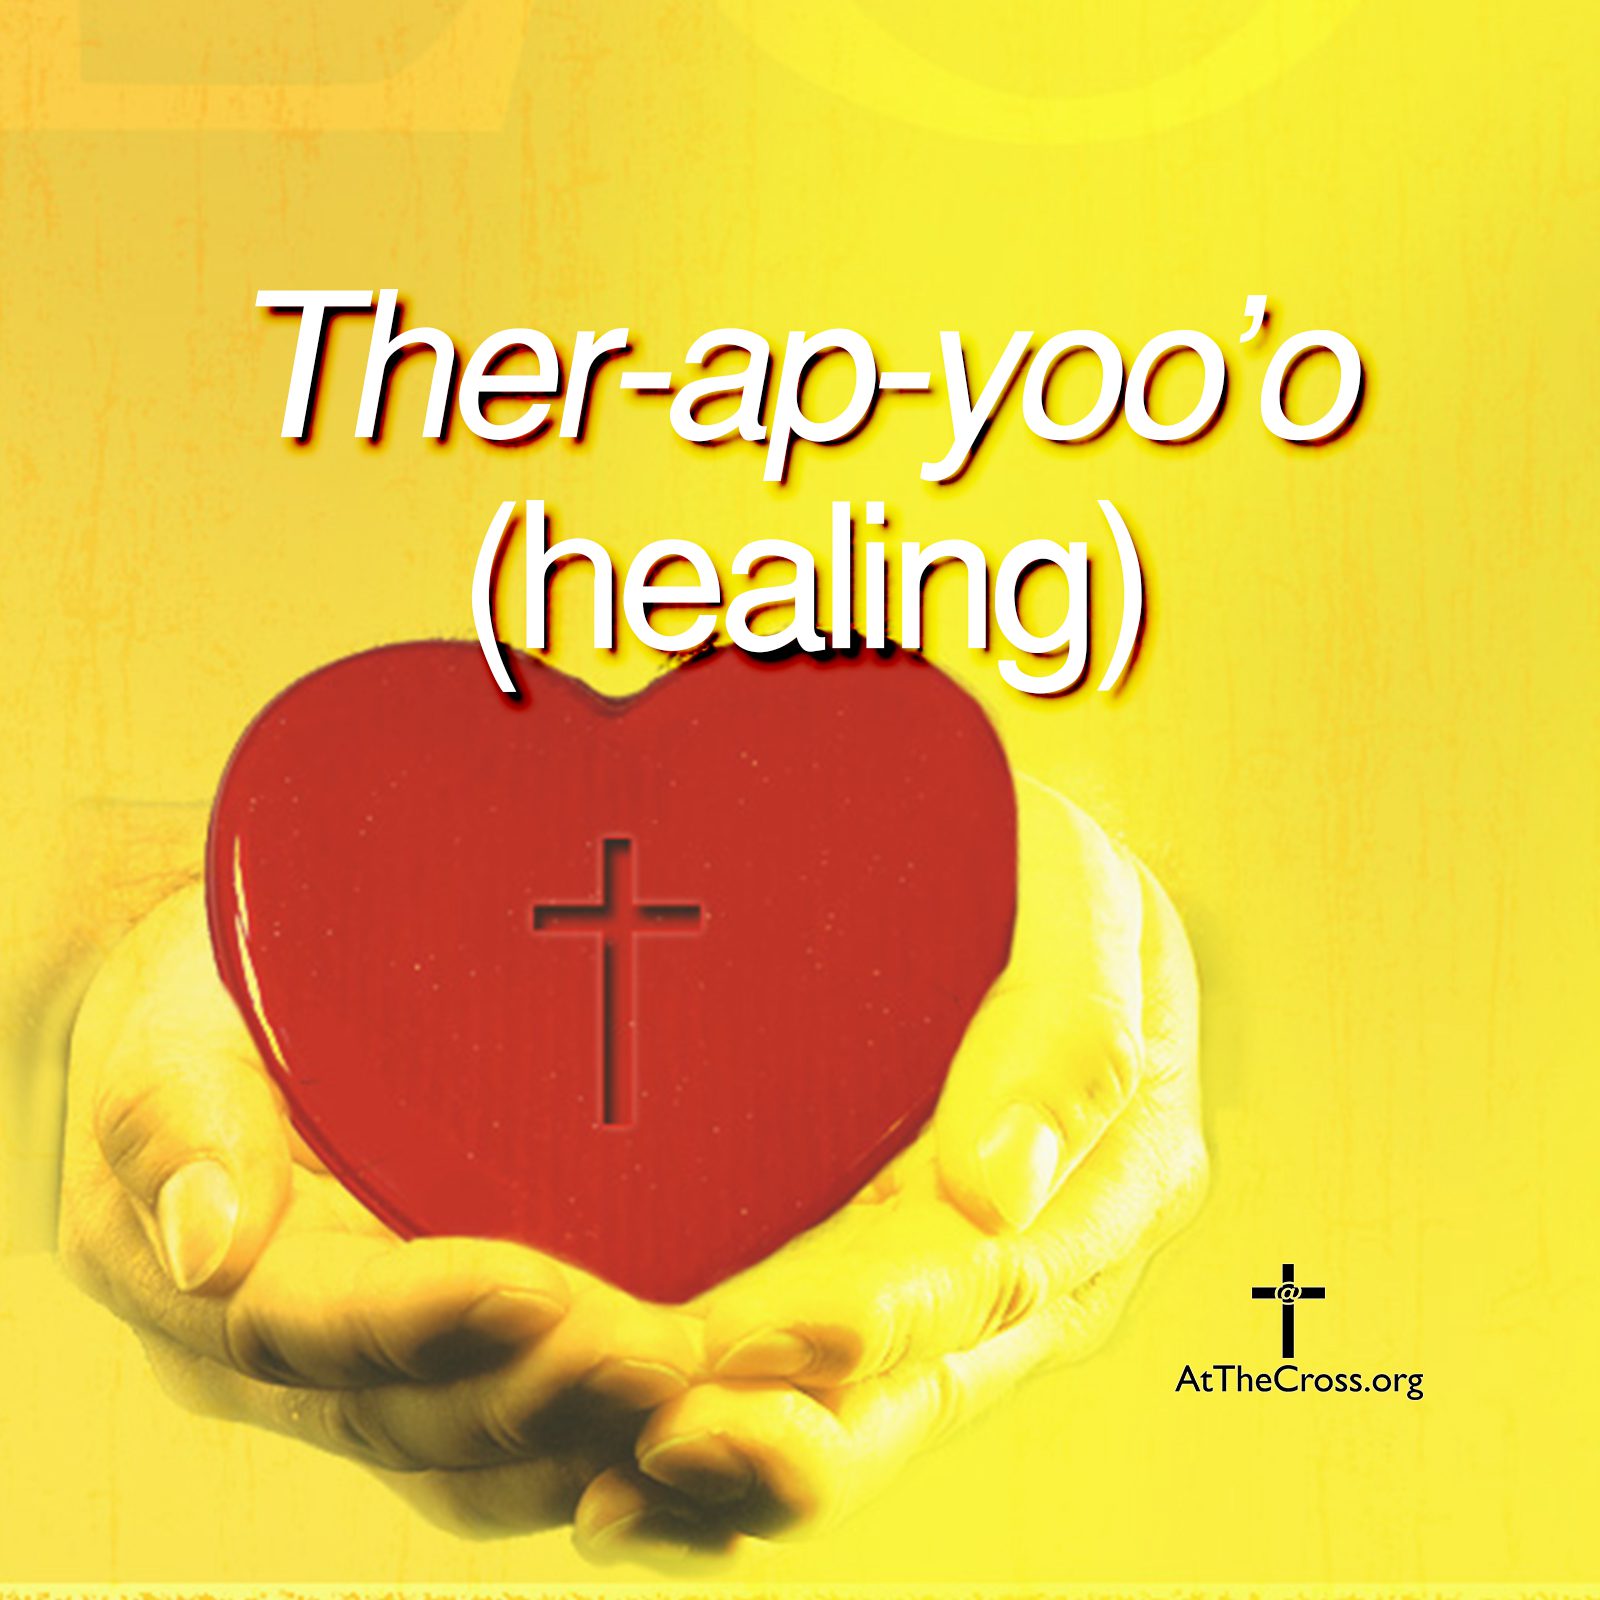 Ther-ap-yoo'-o (Healing)